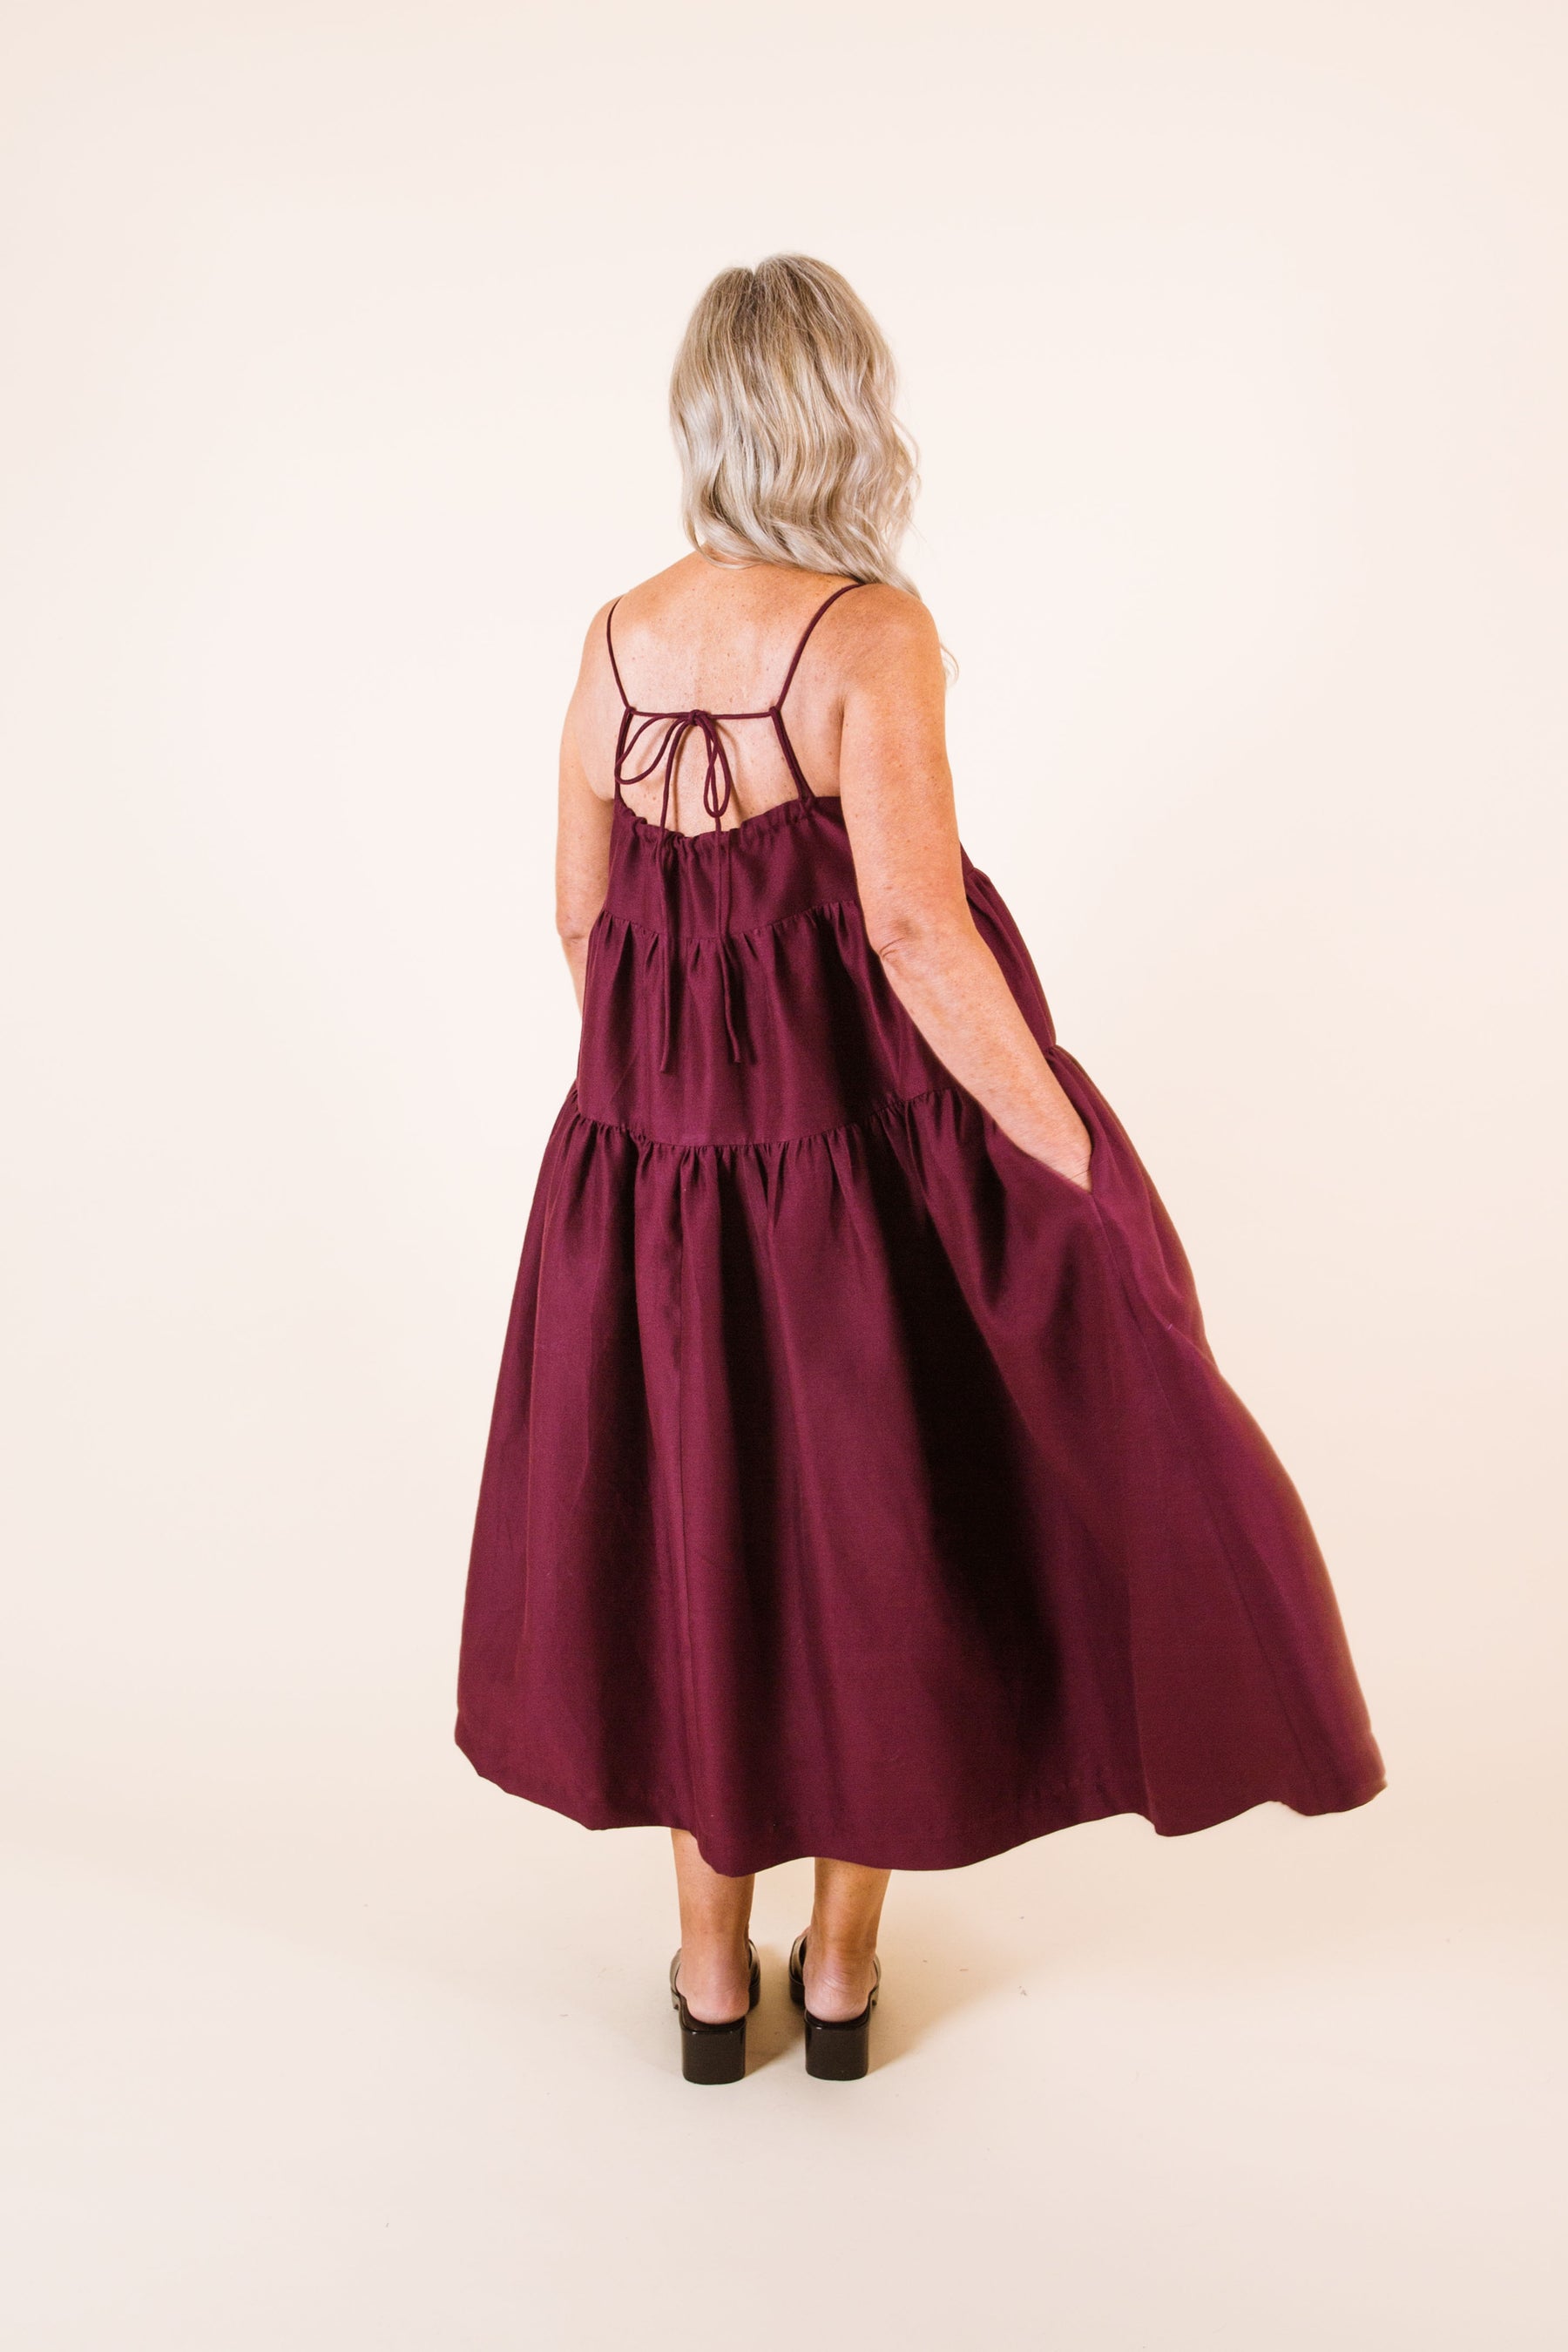 Celestia Dress - Size 1-14